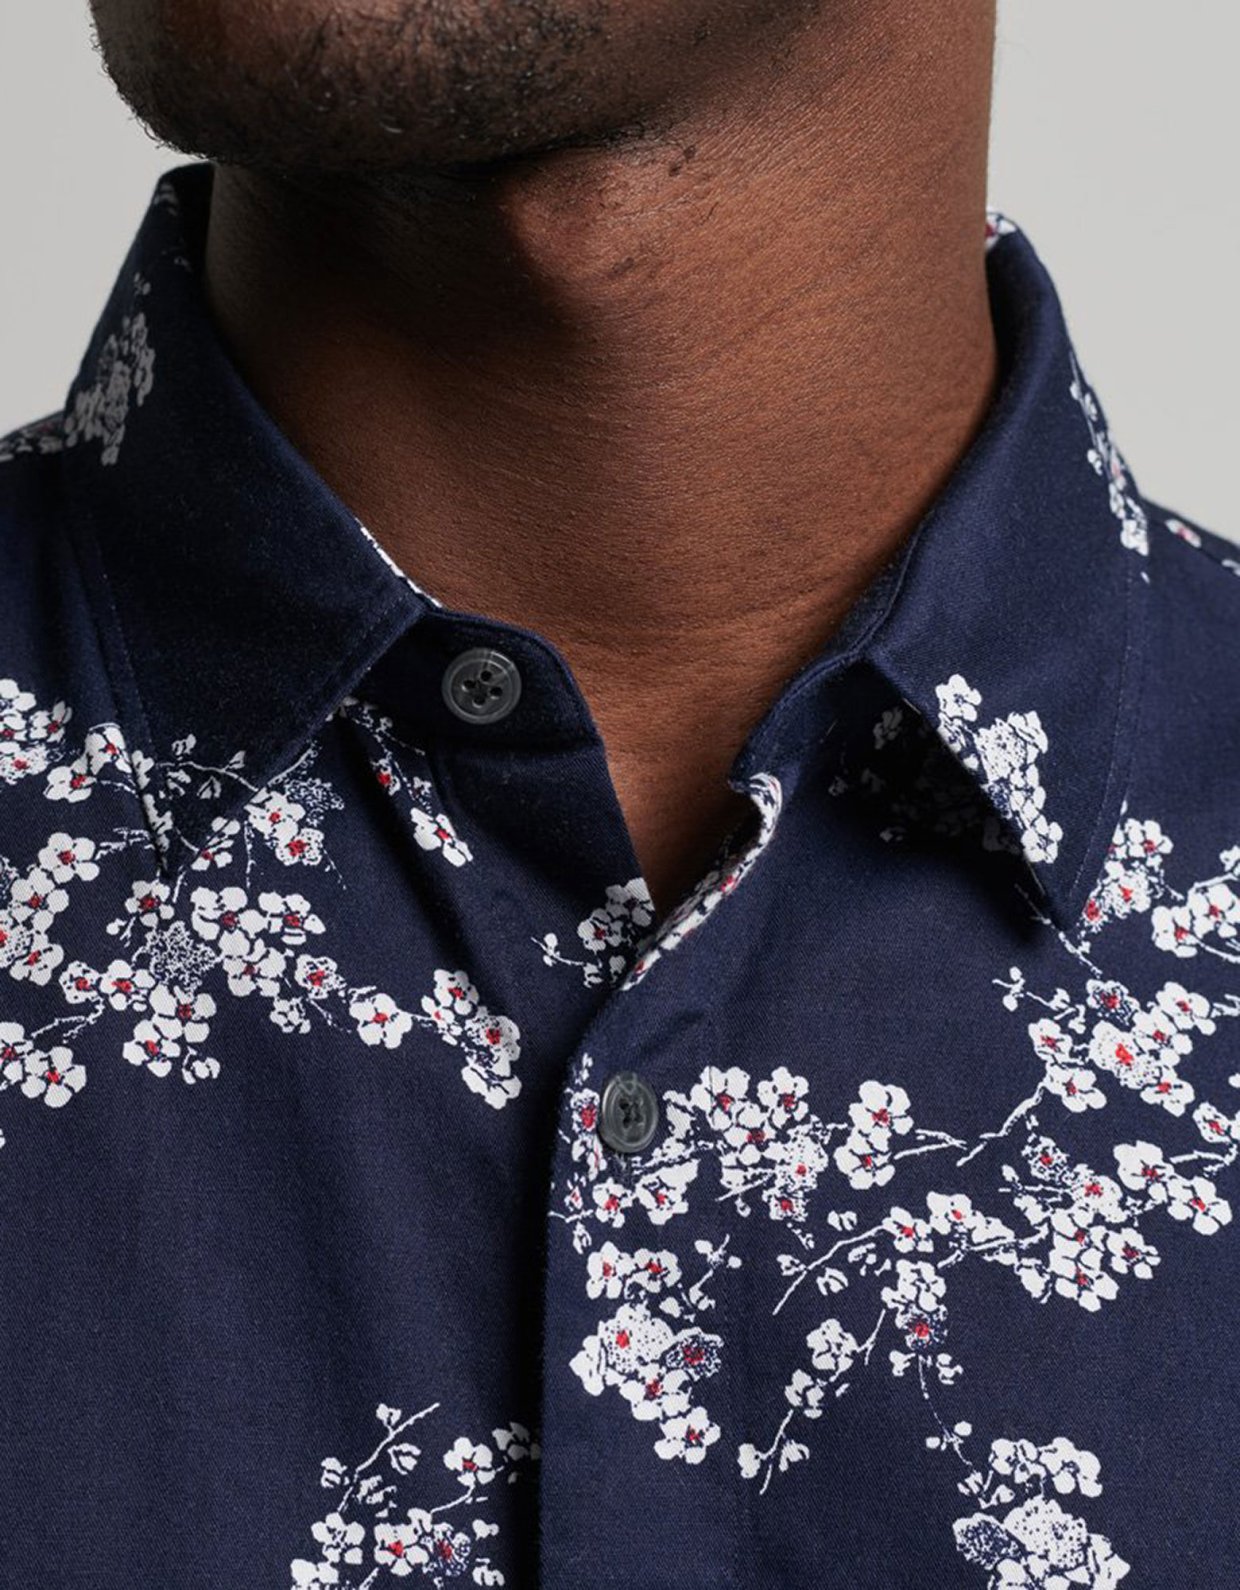 Superdry Vintage Hawaiian shirt indigo blossom